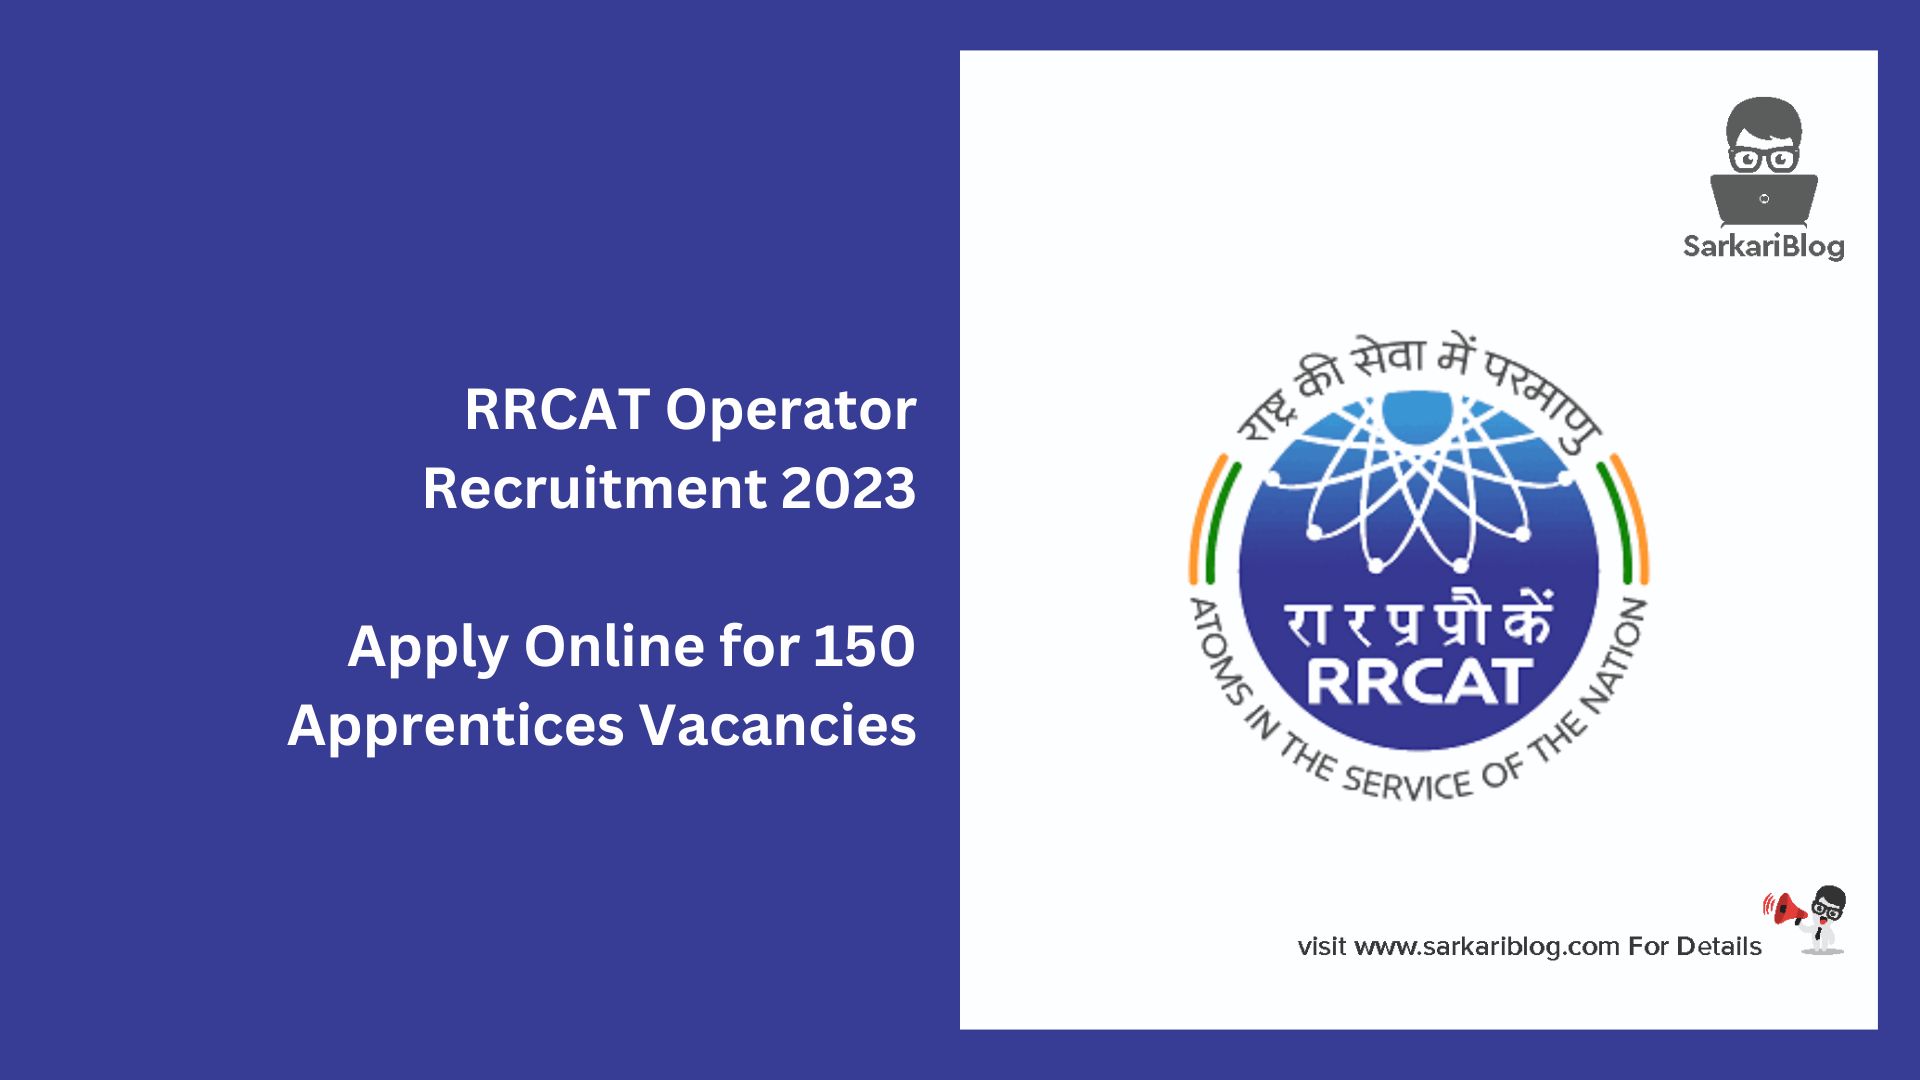 RRCAT Operator Recruitment 2023